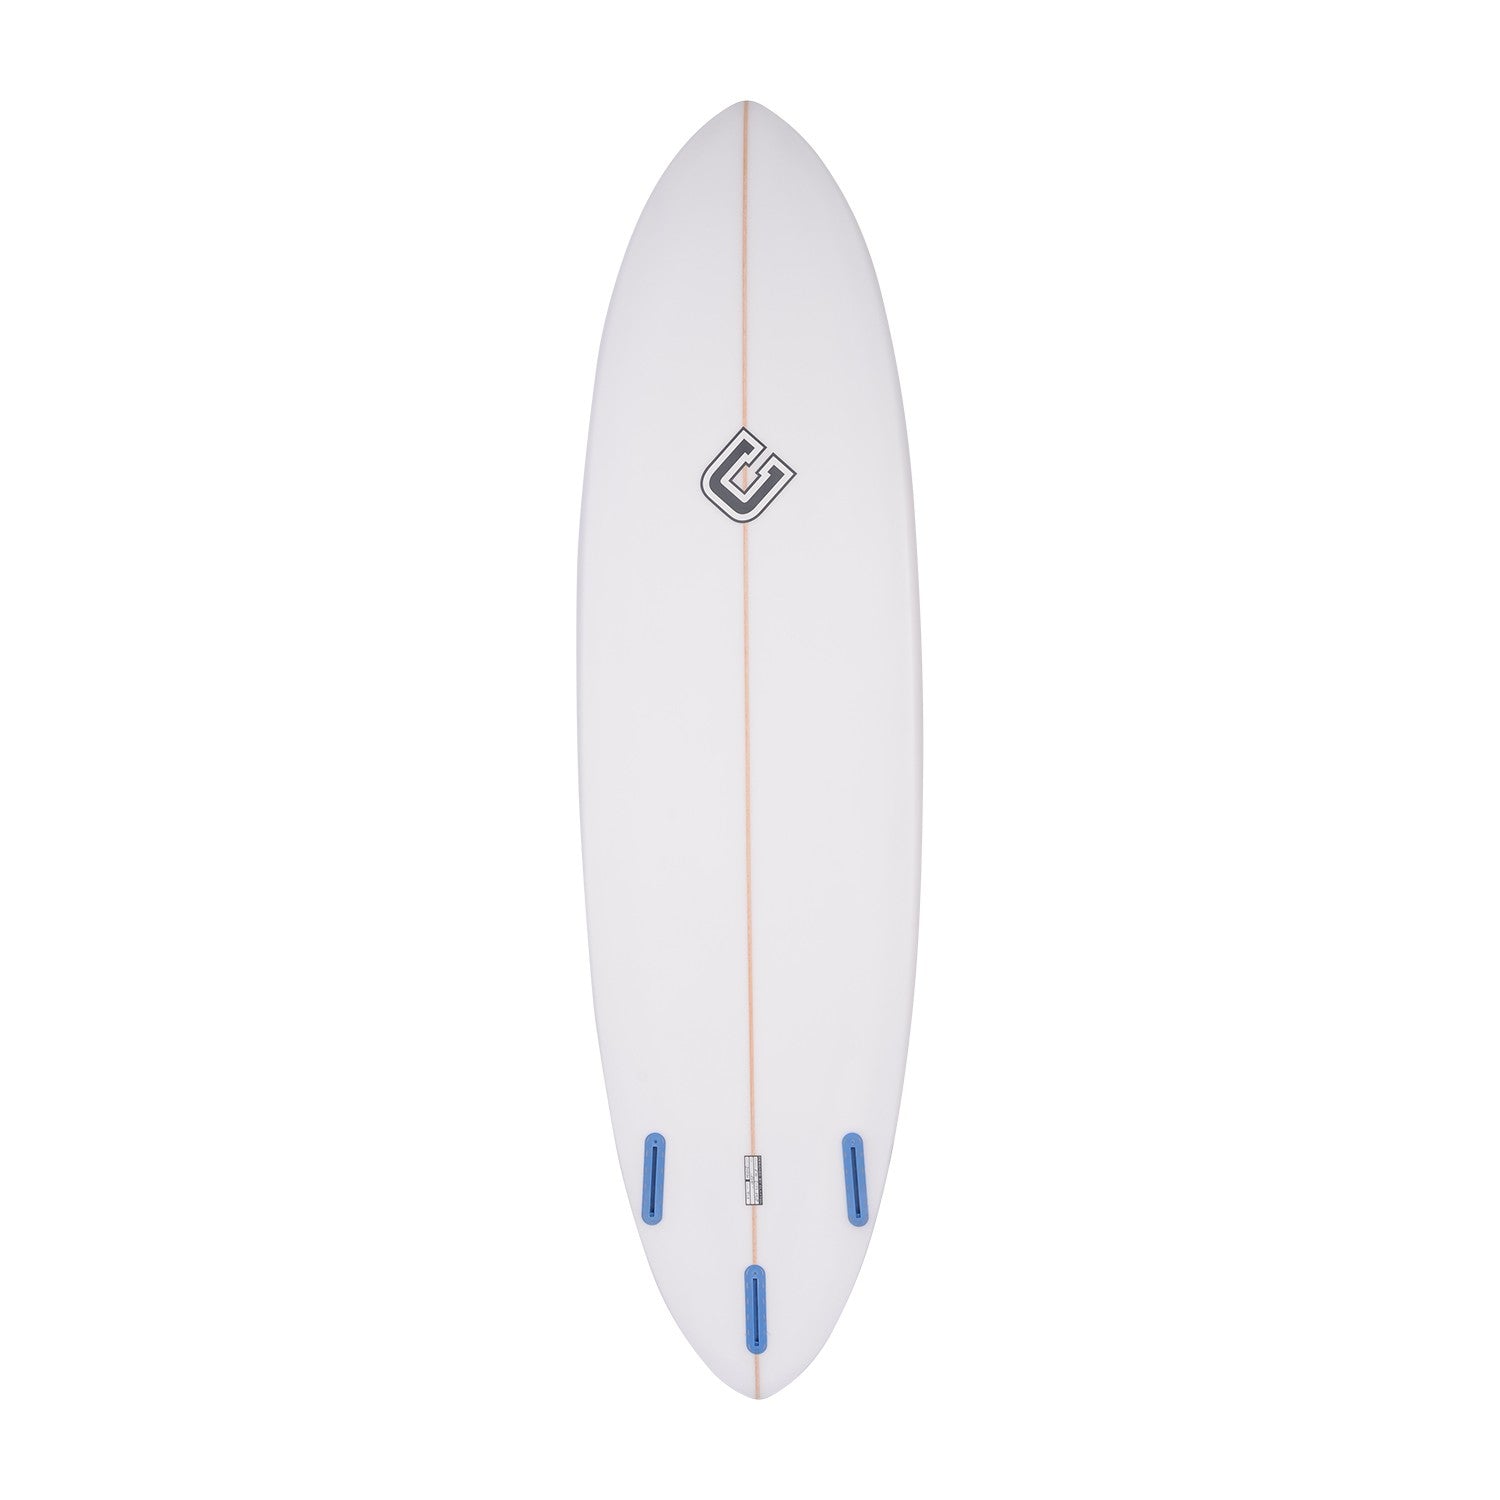 CLAYTON Surfboards - Evo - Futures (PU) - 7'2